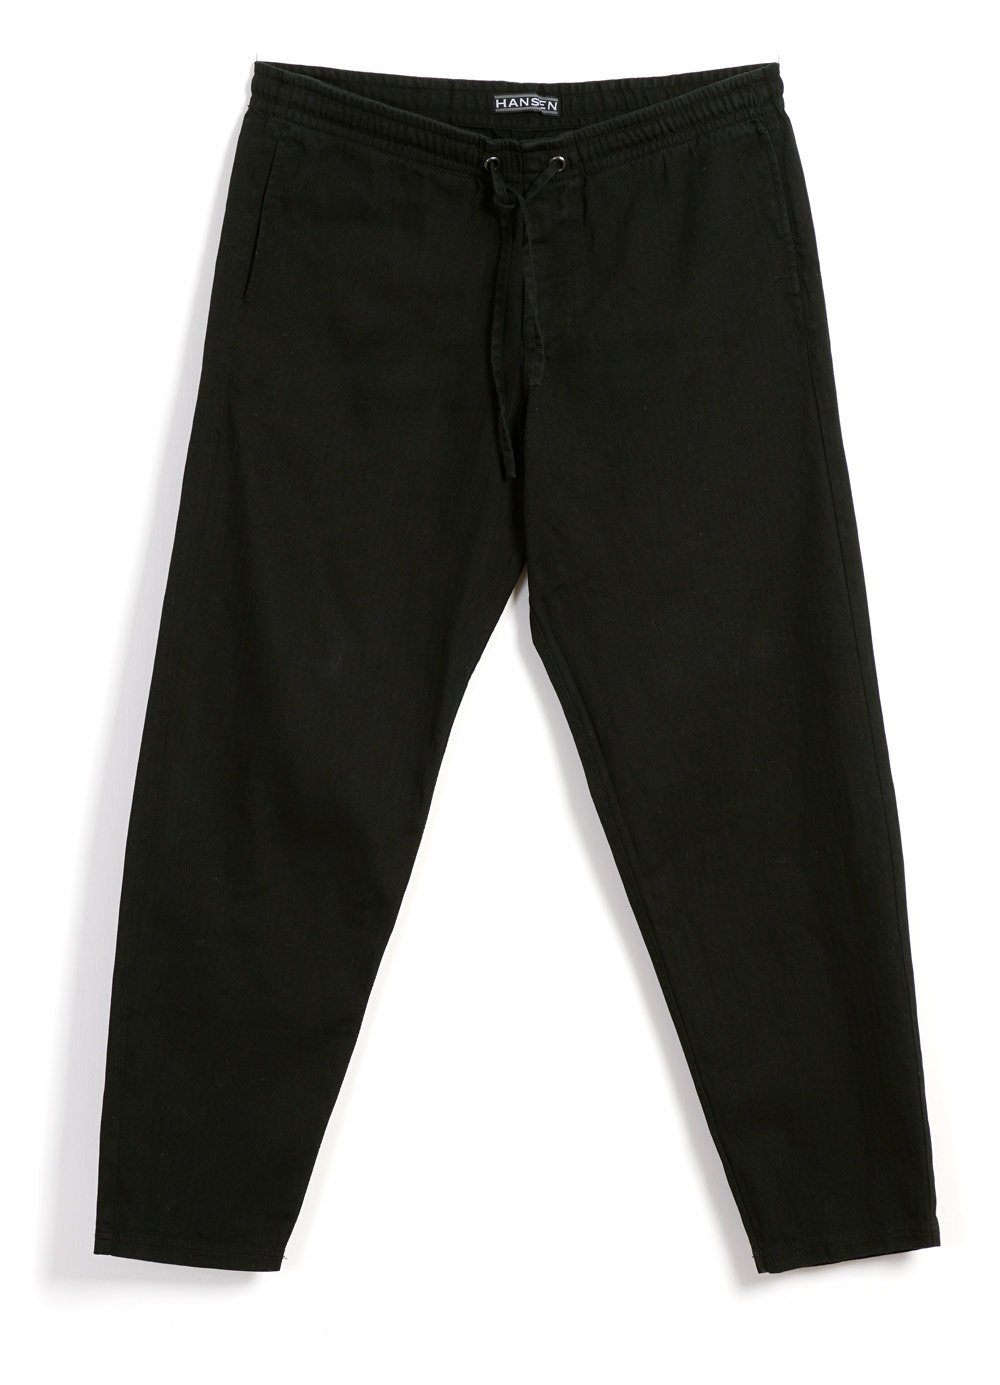 HANSEN GARMENTS - JIM | Casual Drawstring Trousers | Washed Black - HANSEN Garments